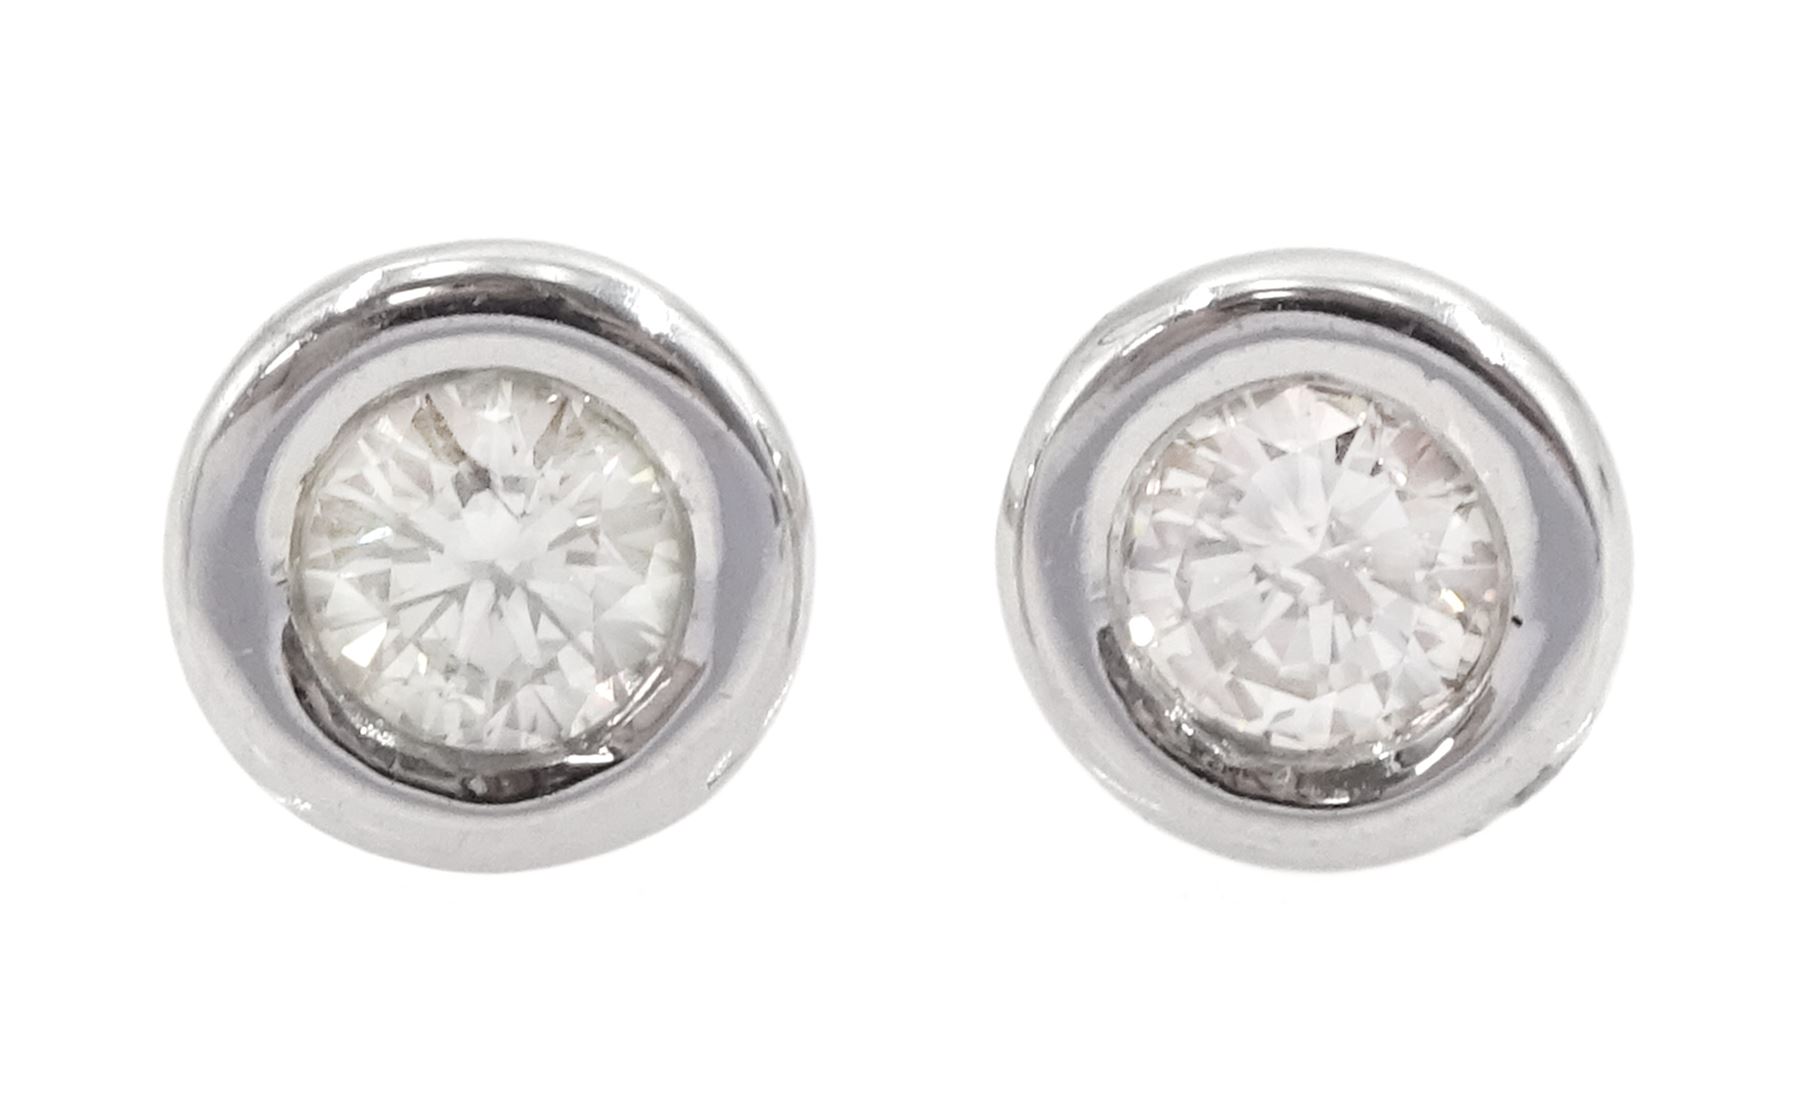 Pair of 14ct white gold bezel set round brilliant cut diamond stud earrings